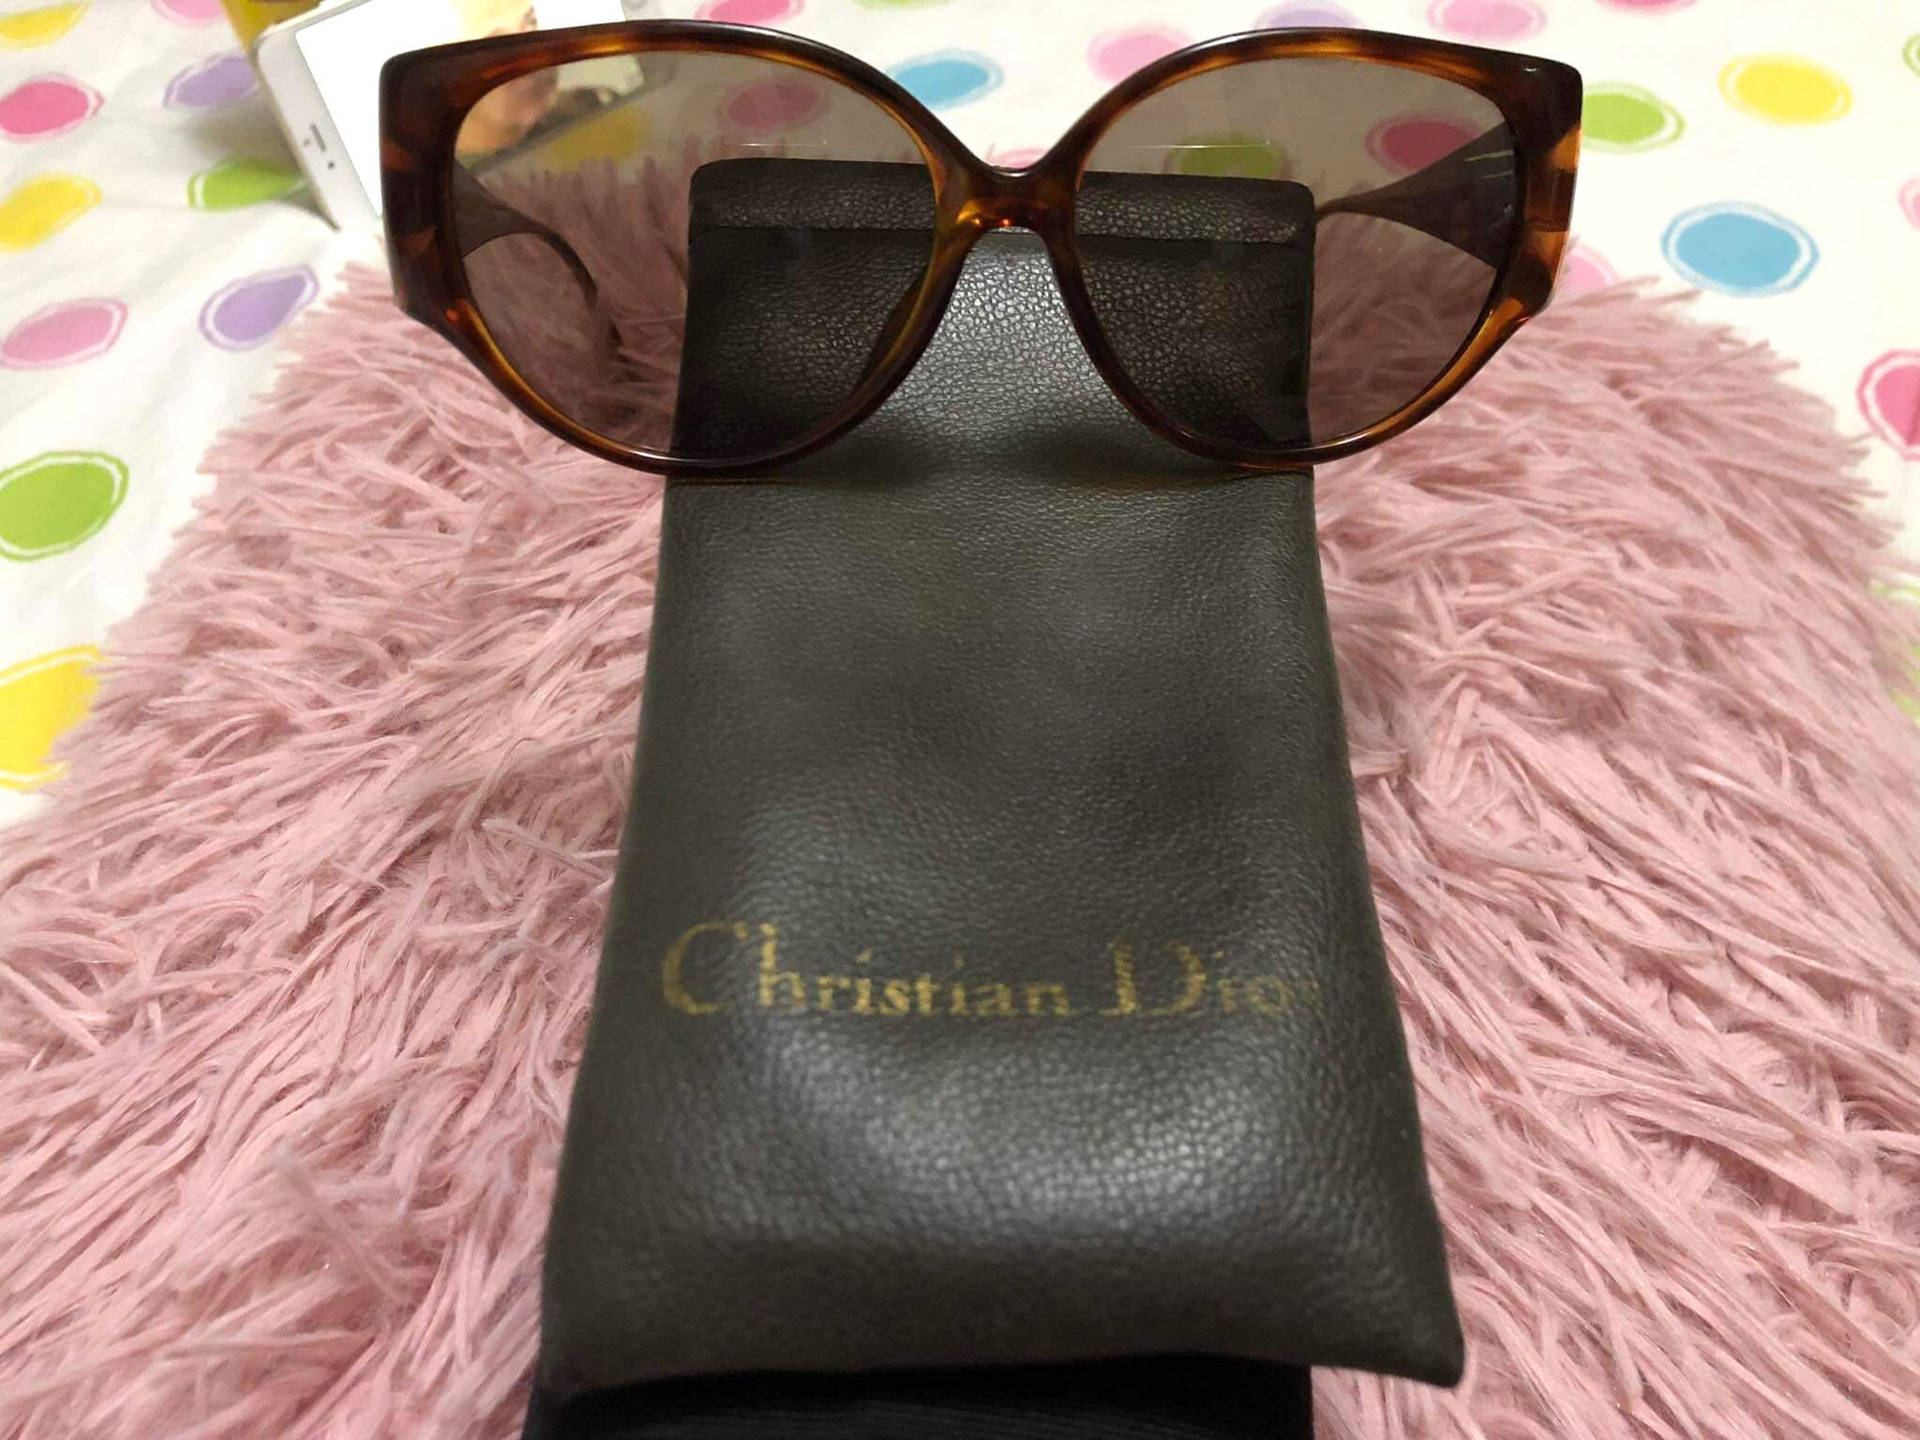 Glamorous Vintage Christian Dior Sunglasses For Women Background